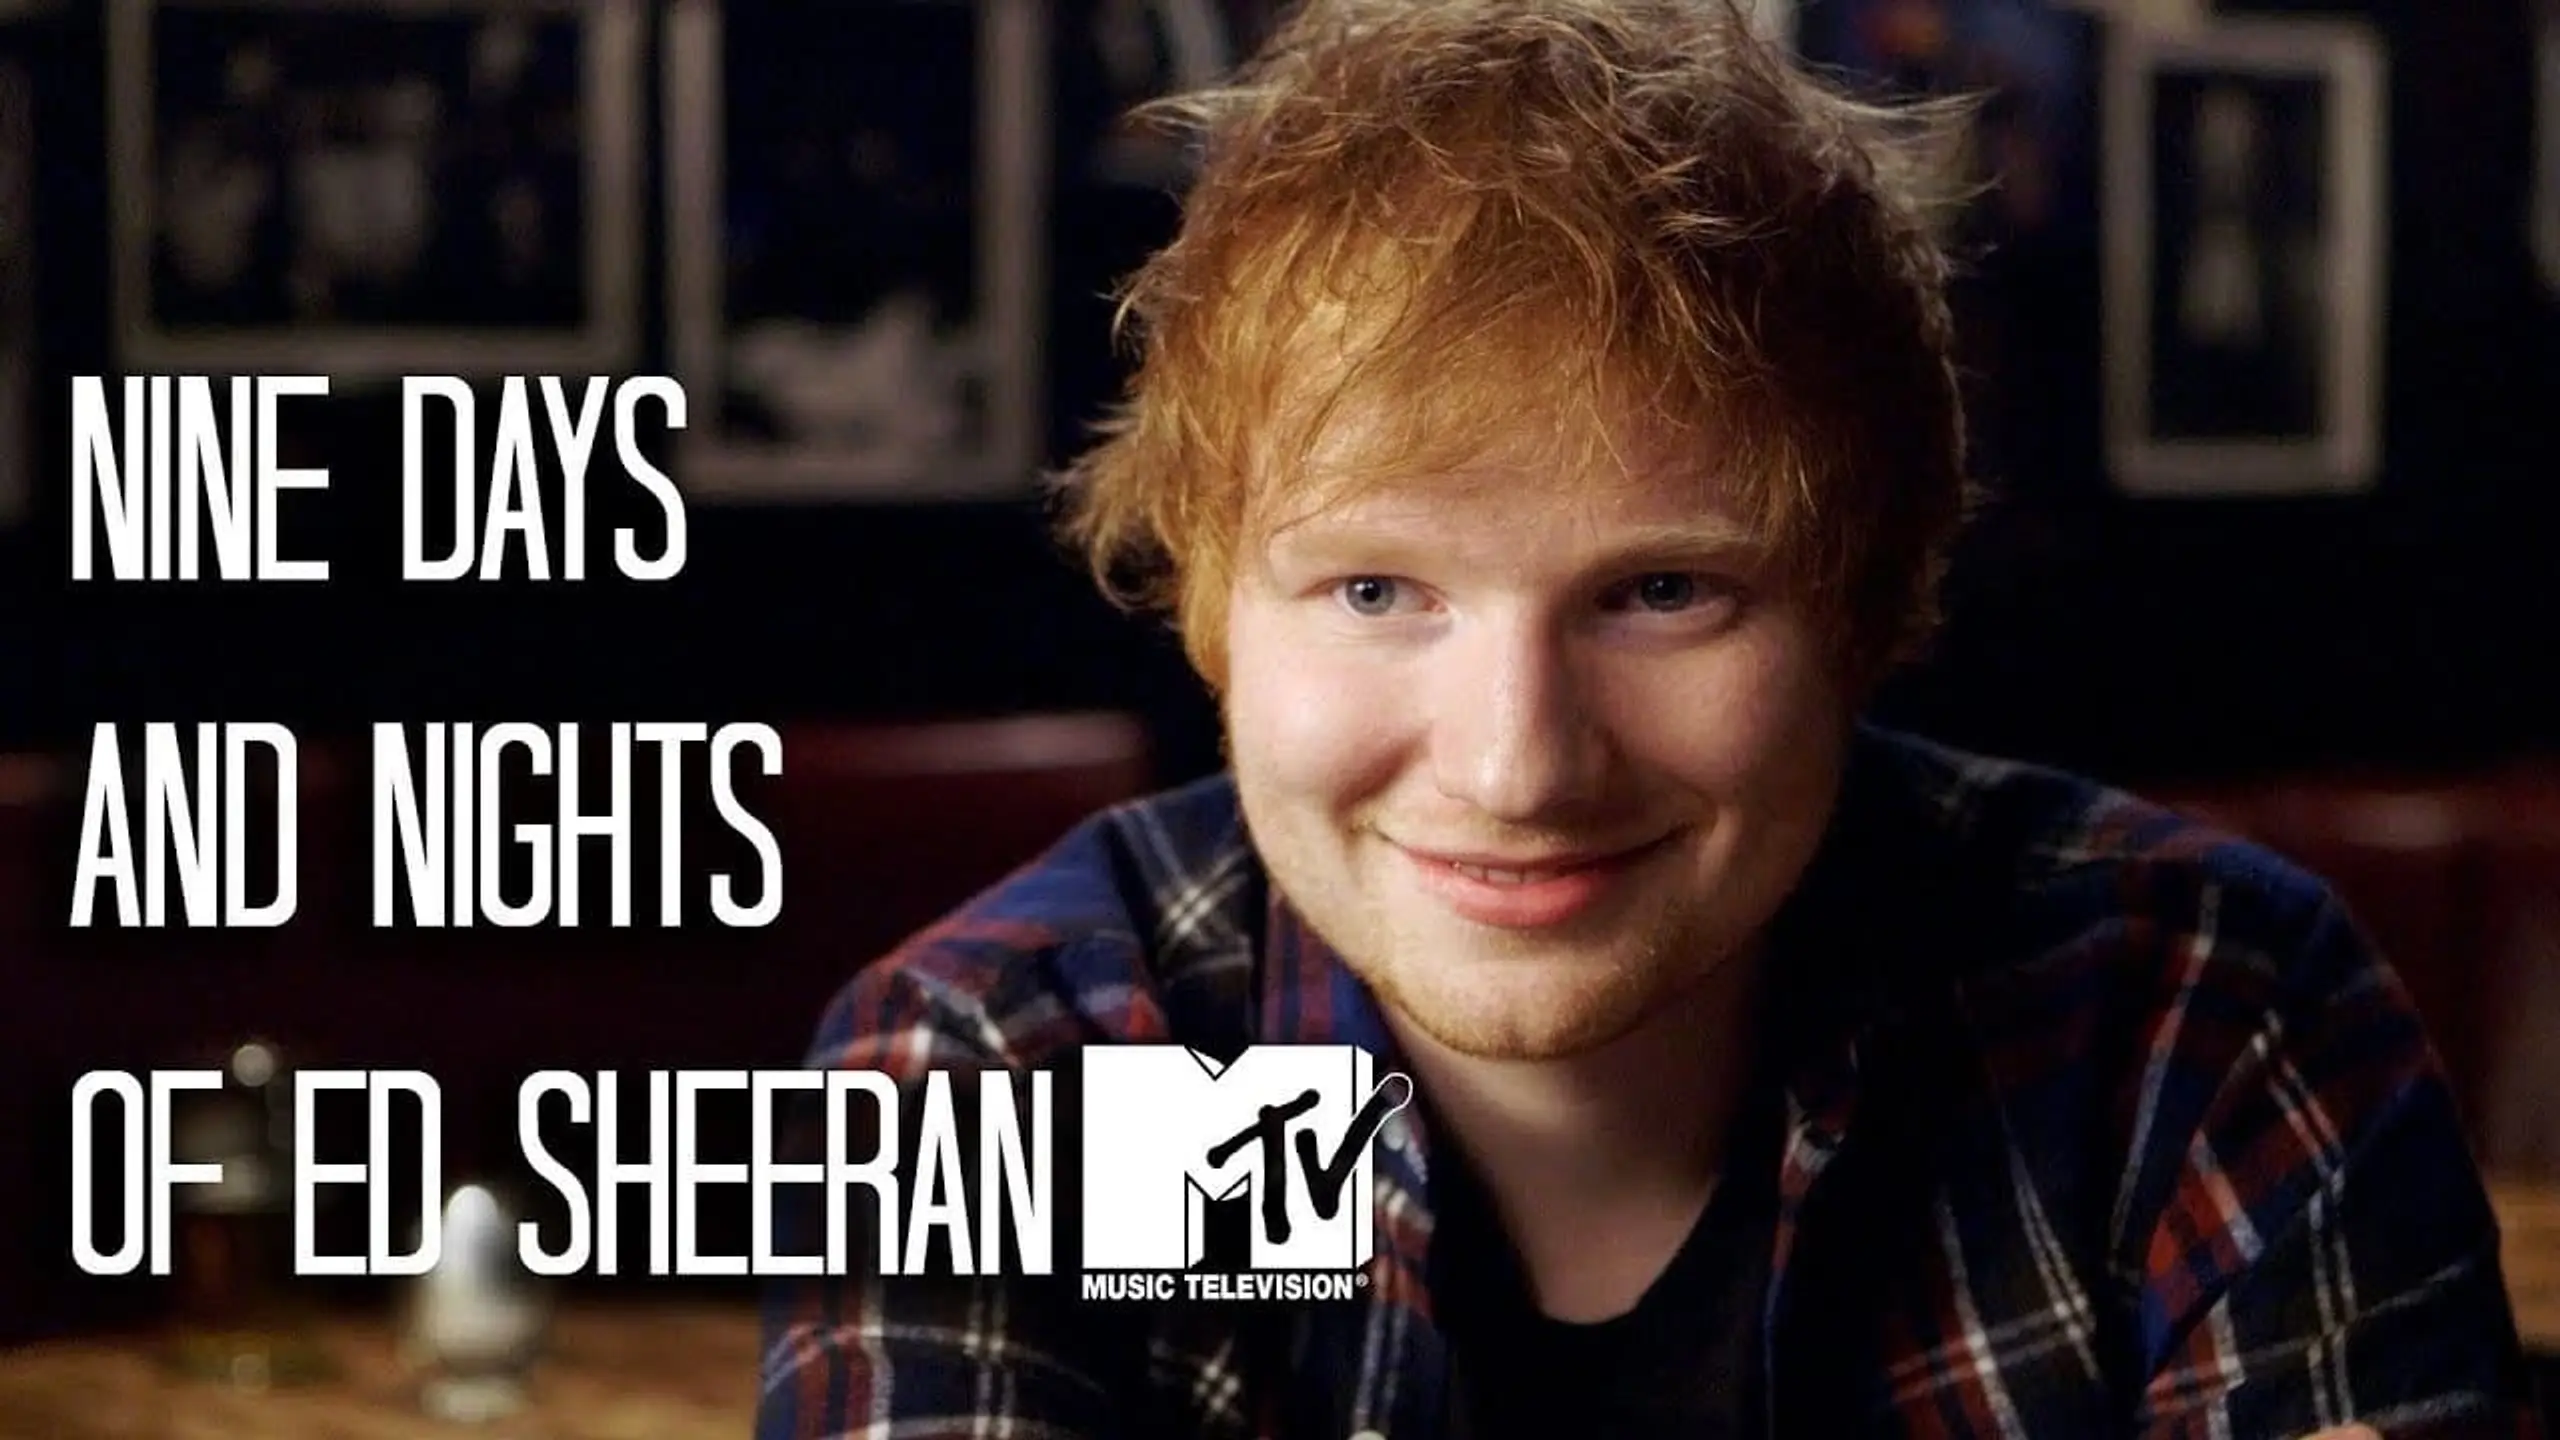 Nine Days and Nights of Ed Sheeran